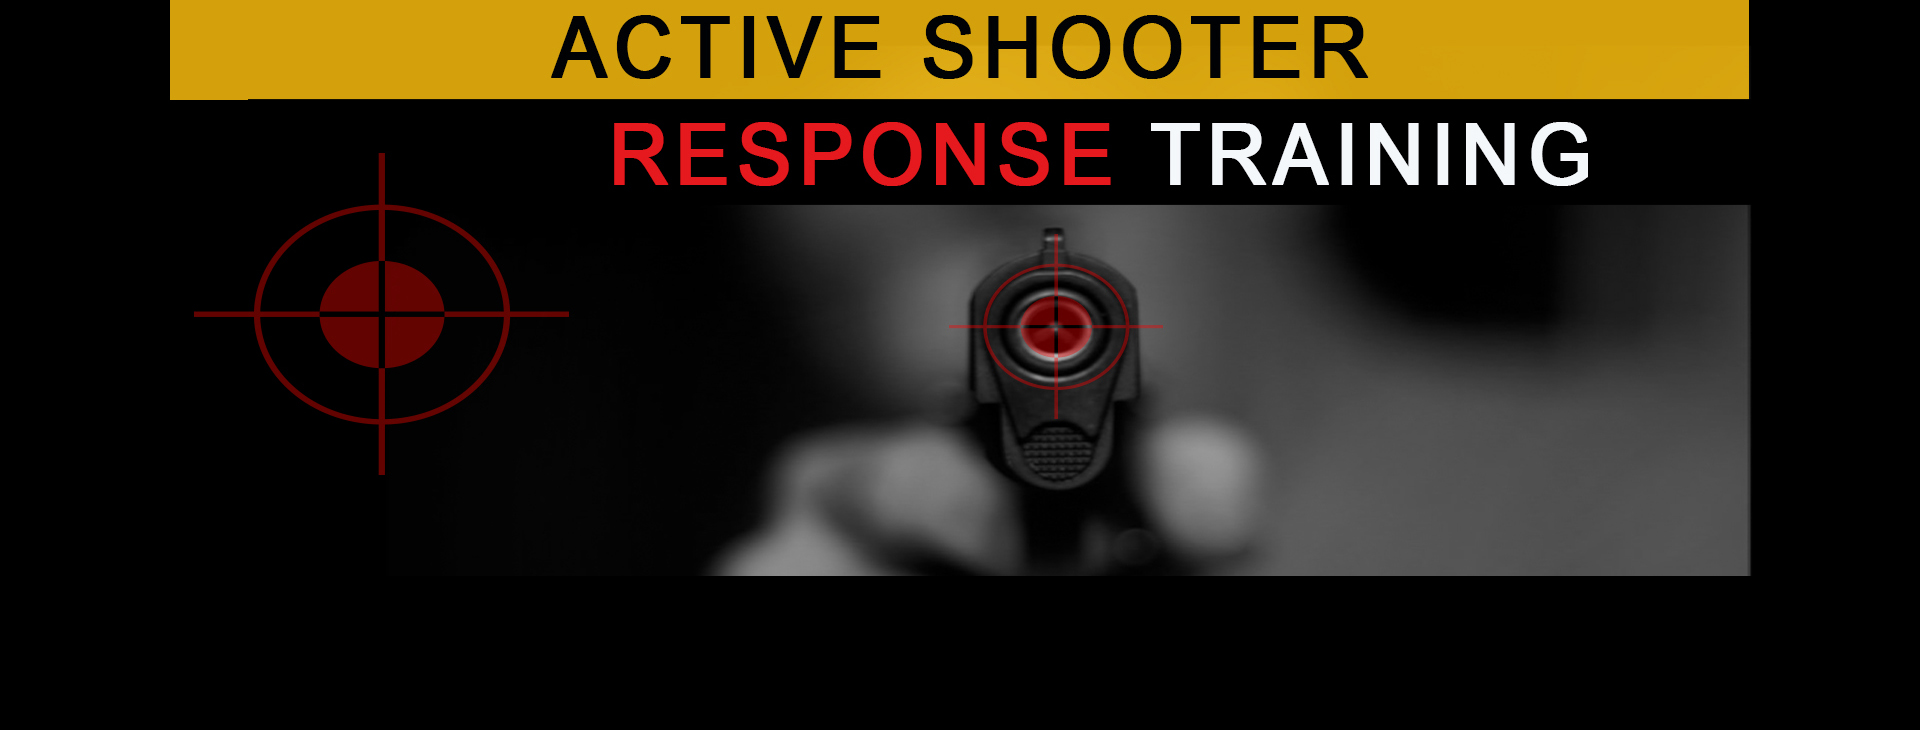  Active shooter response training